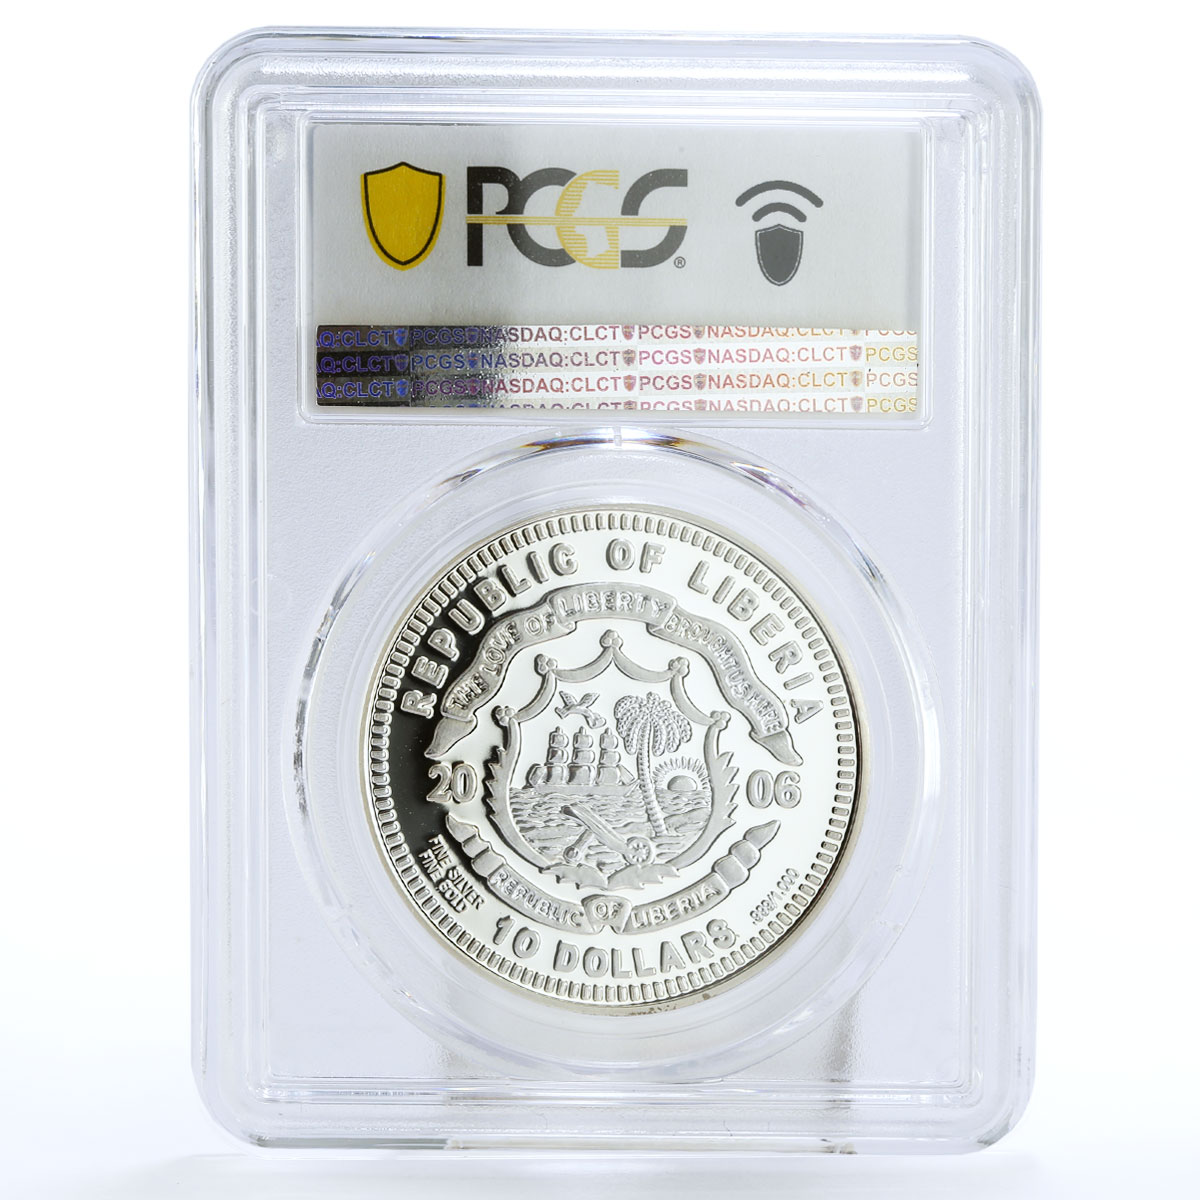 Liberia 10 dollars Madagascarian Dwarf Lemur PR66 PCGS gilded silver coin 2006